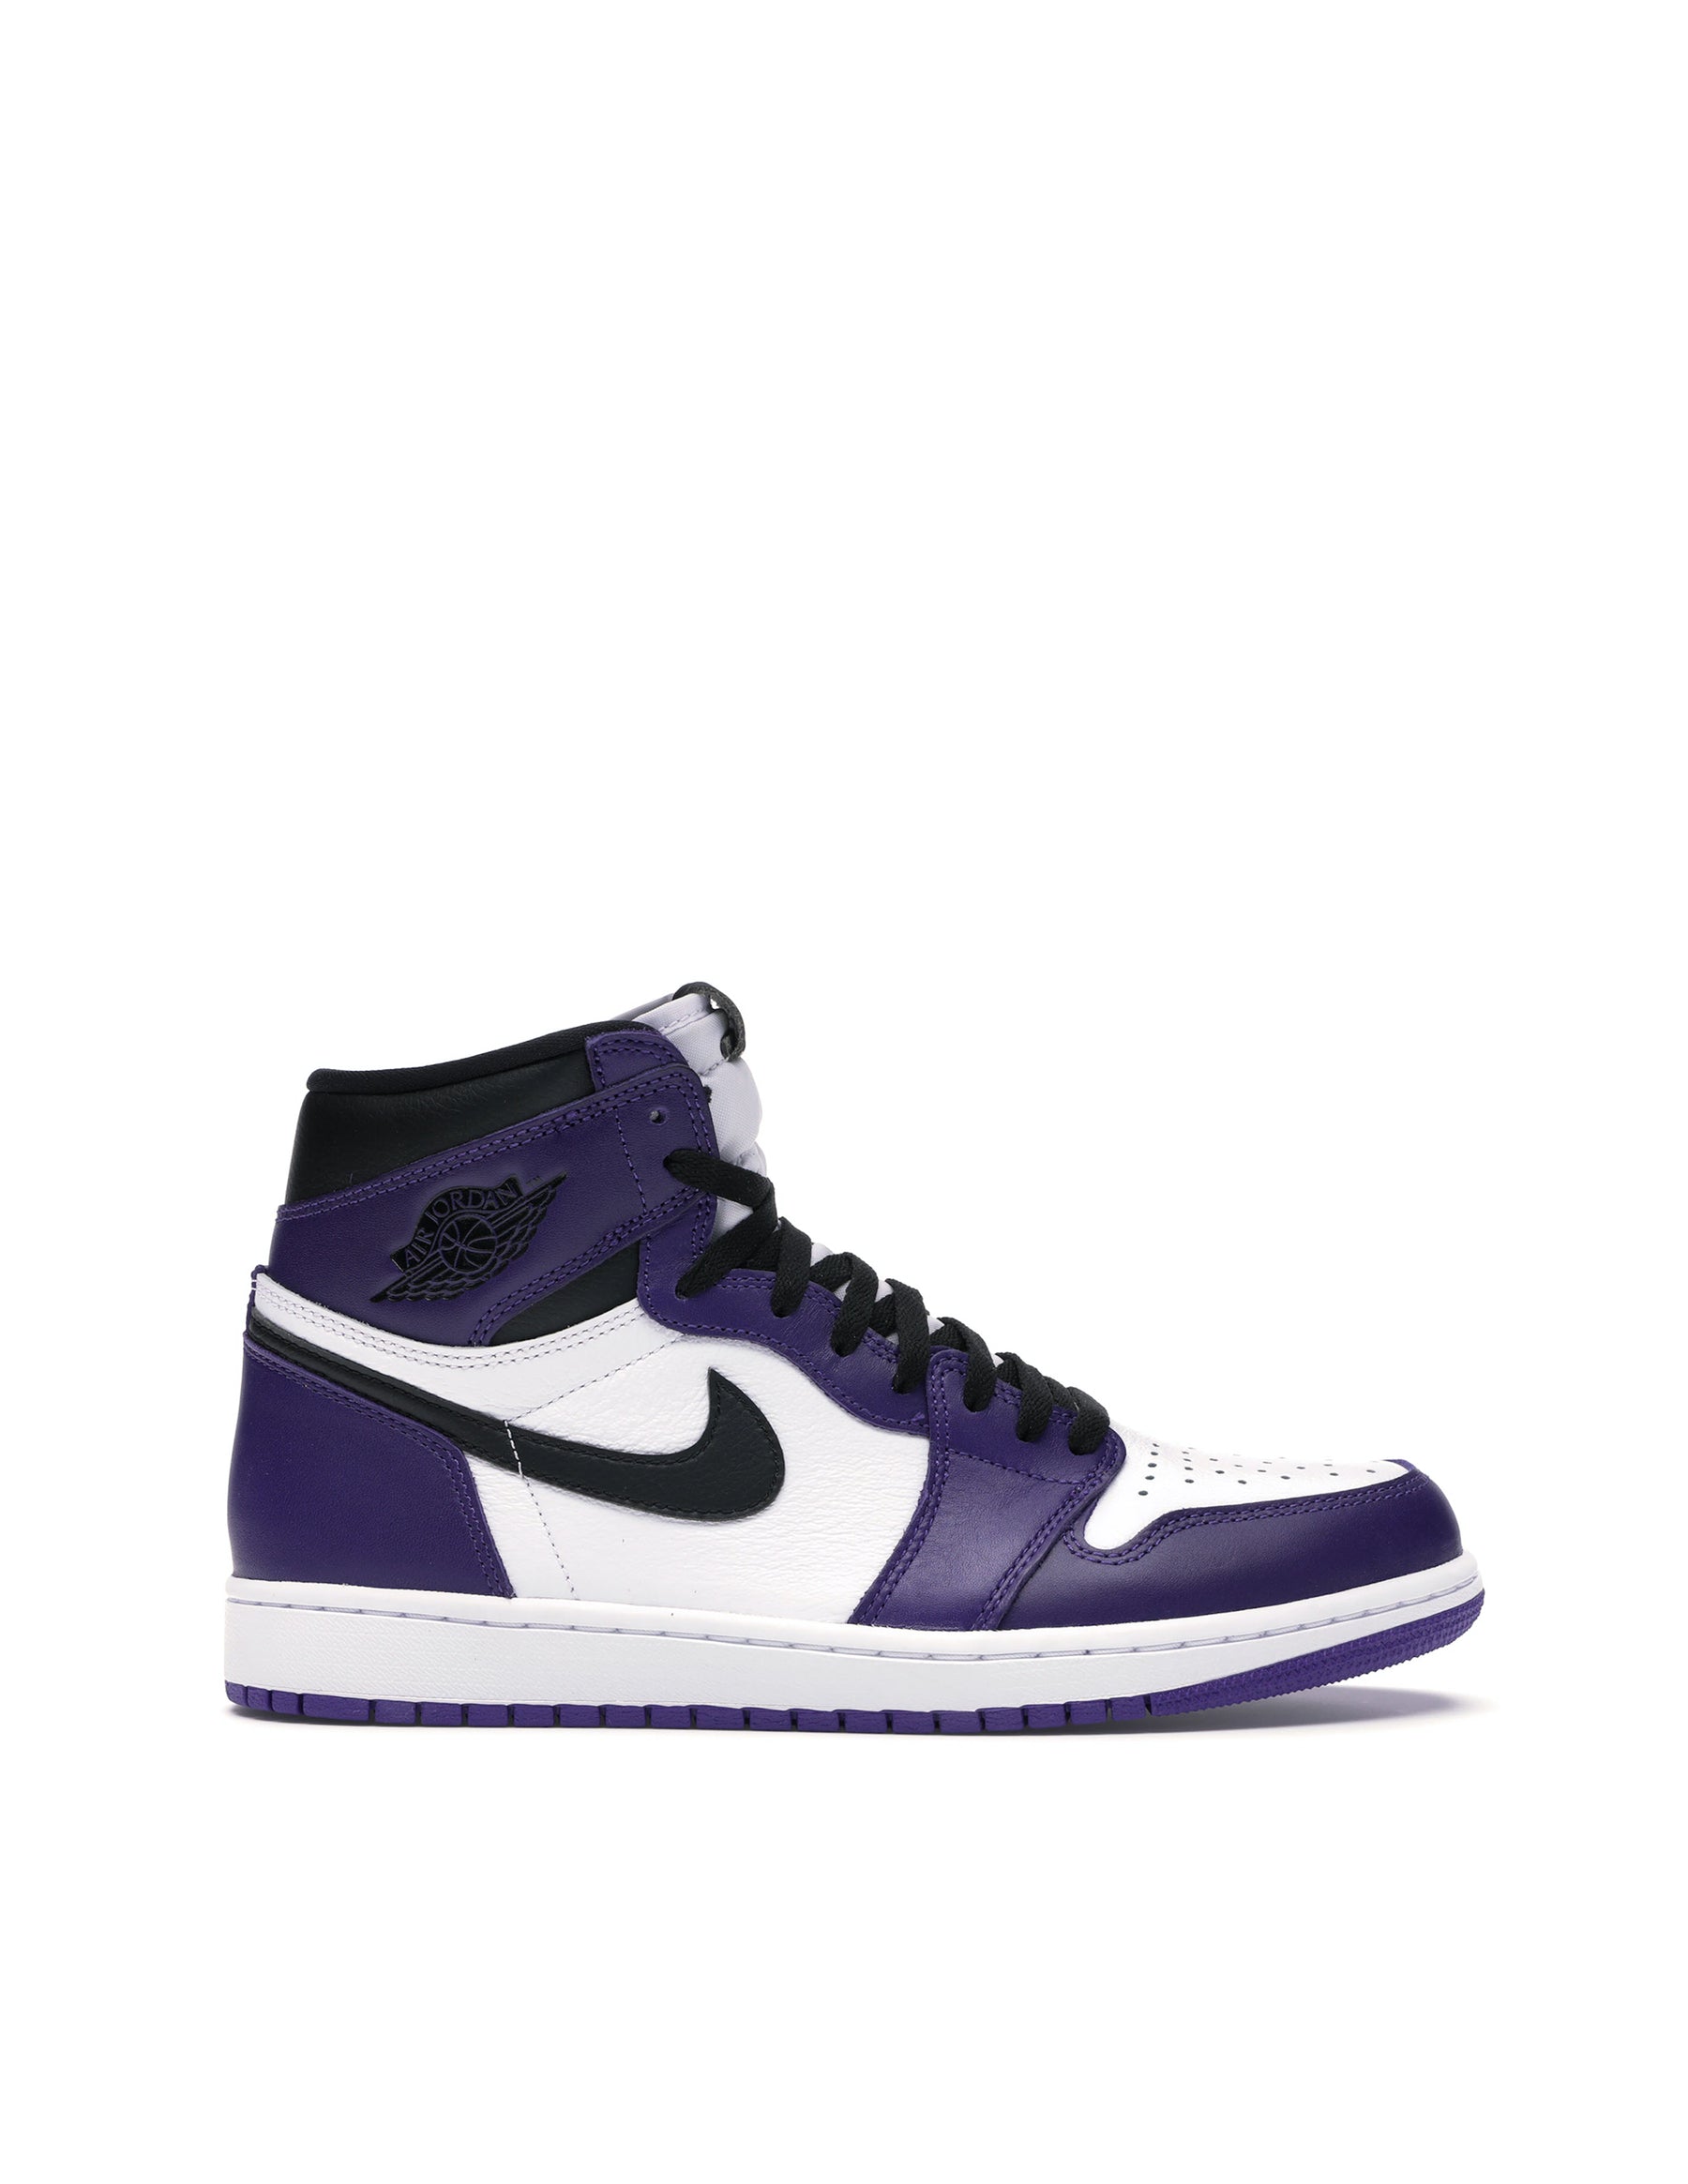 Jordan 1 Retro High "Court Purple White"